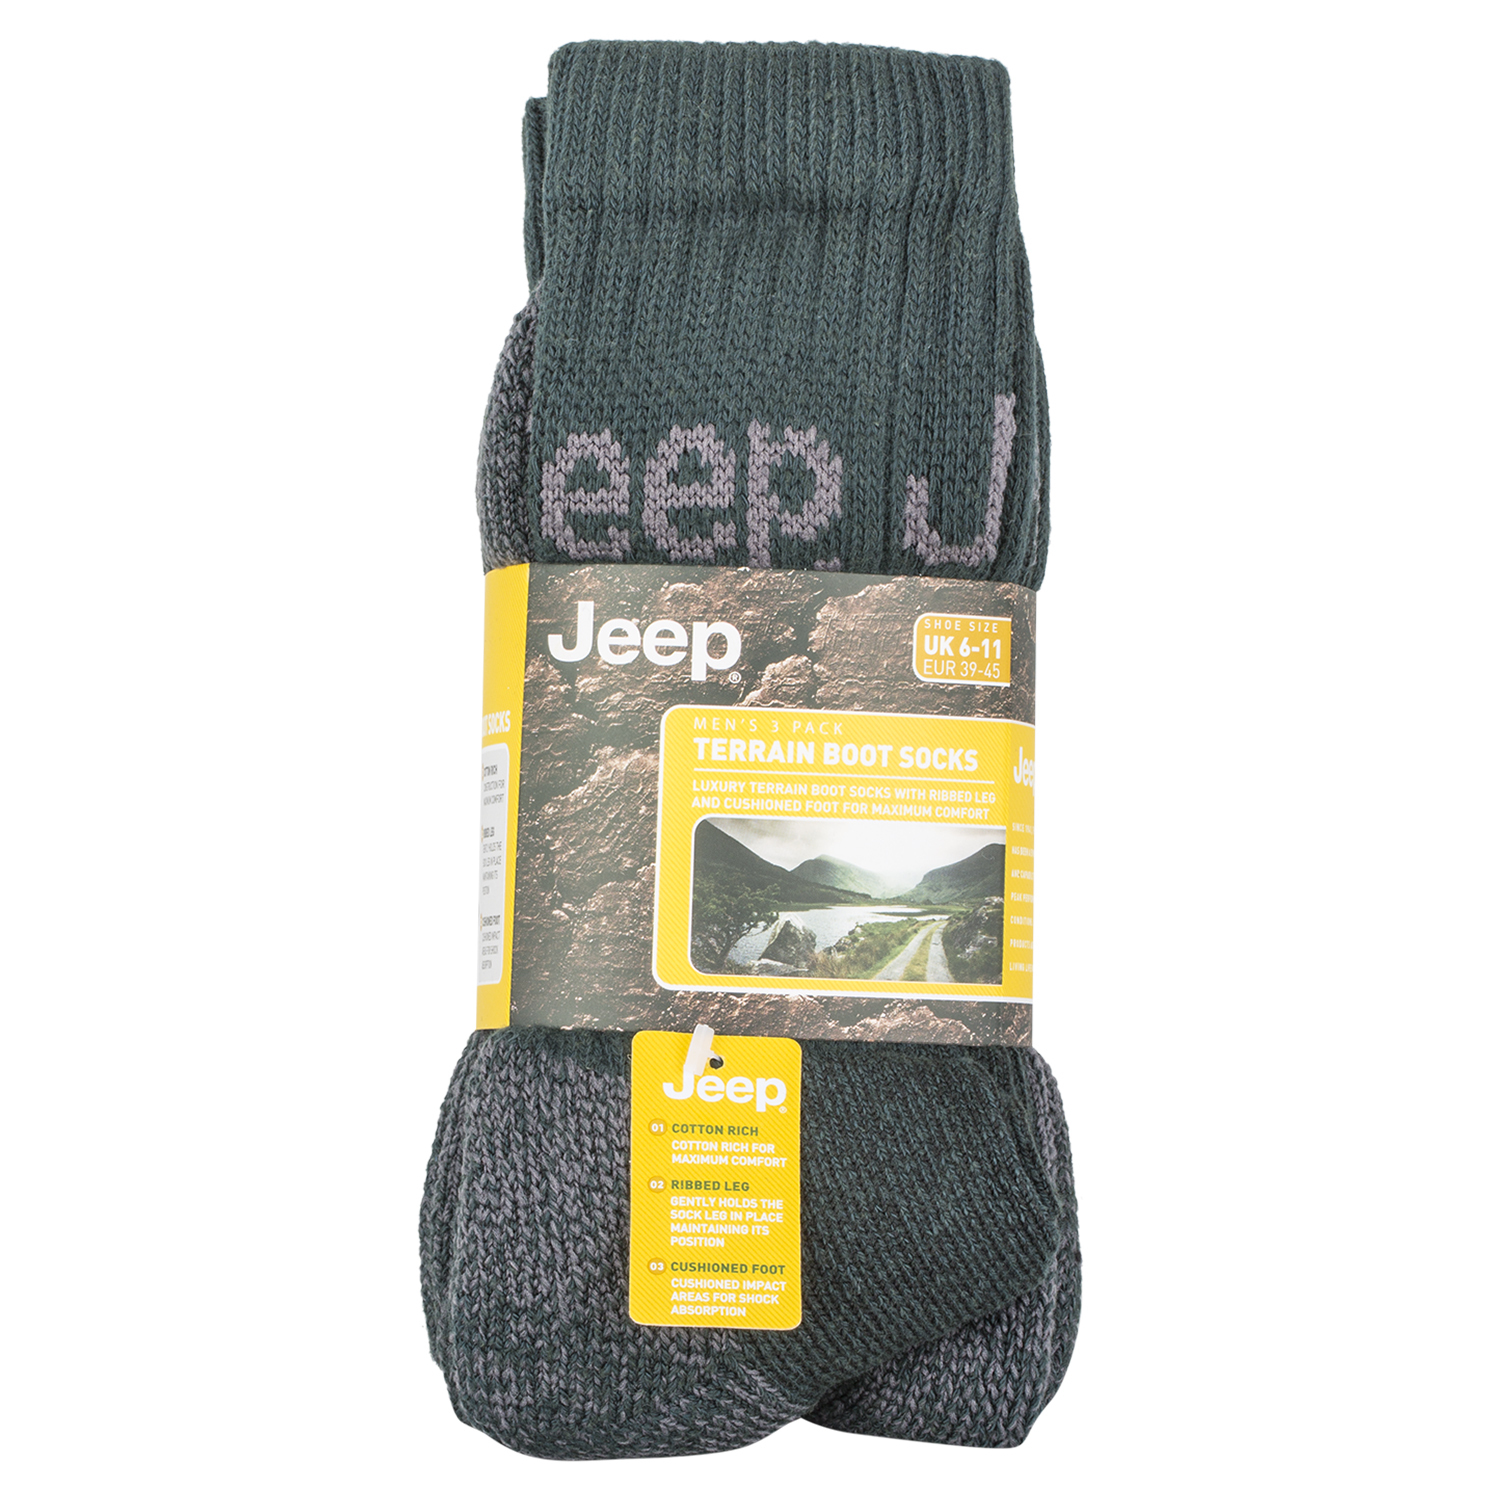 Single Jeep Terrain Mens Socks 3 Pack in Assorted styles Image 4